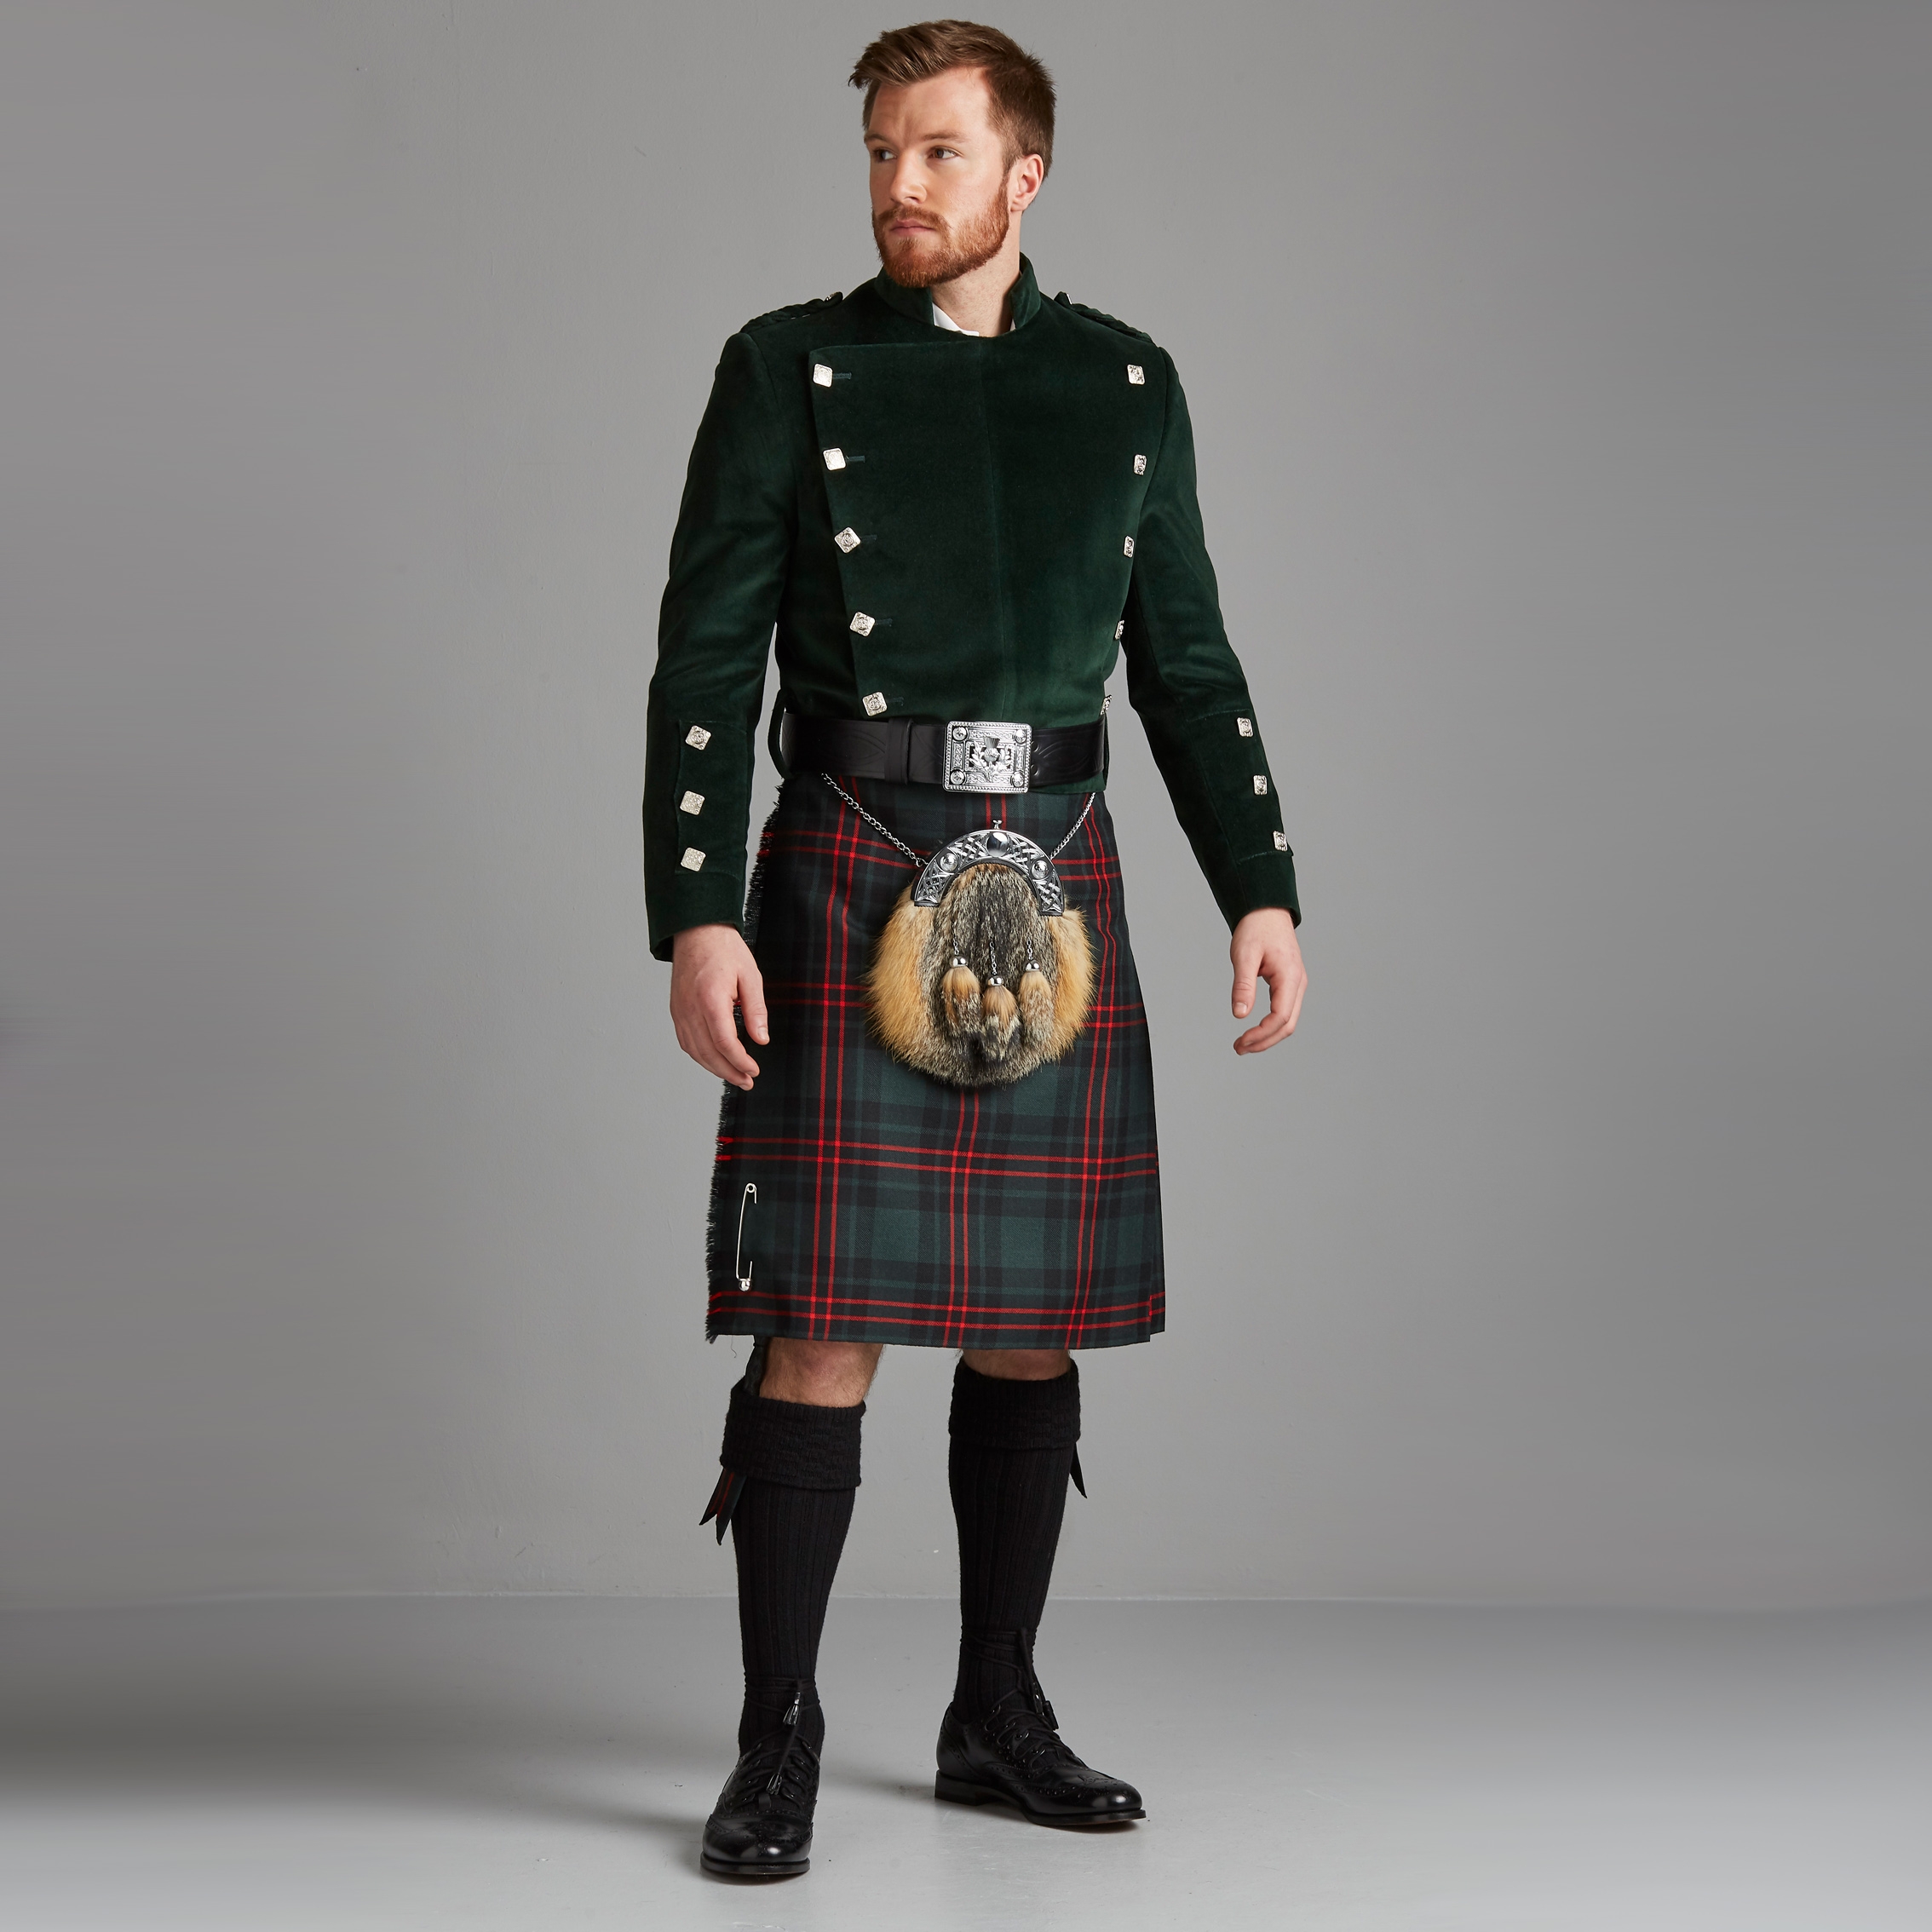 Highland Dress, Kilts and Kilt 